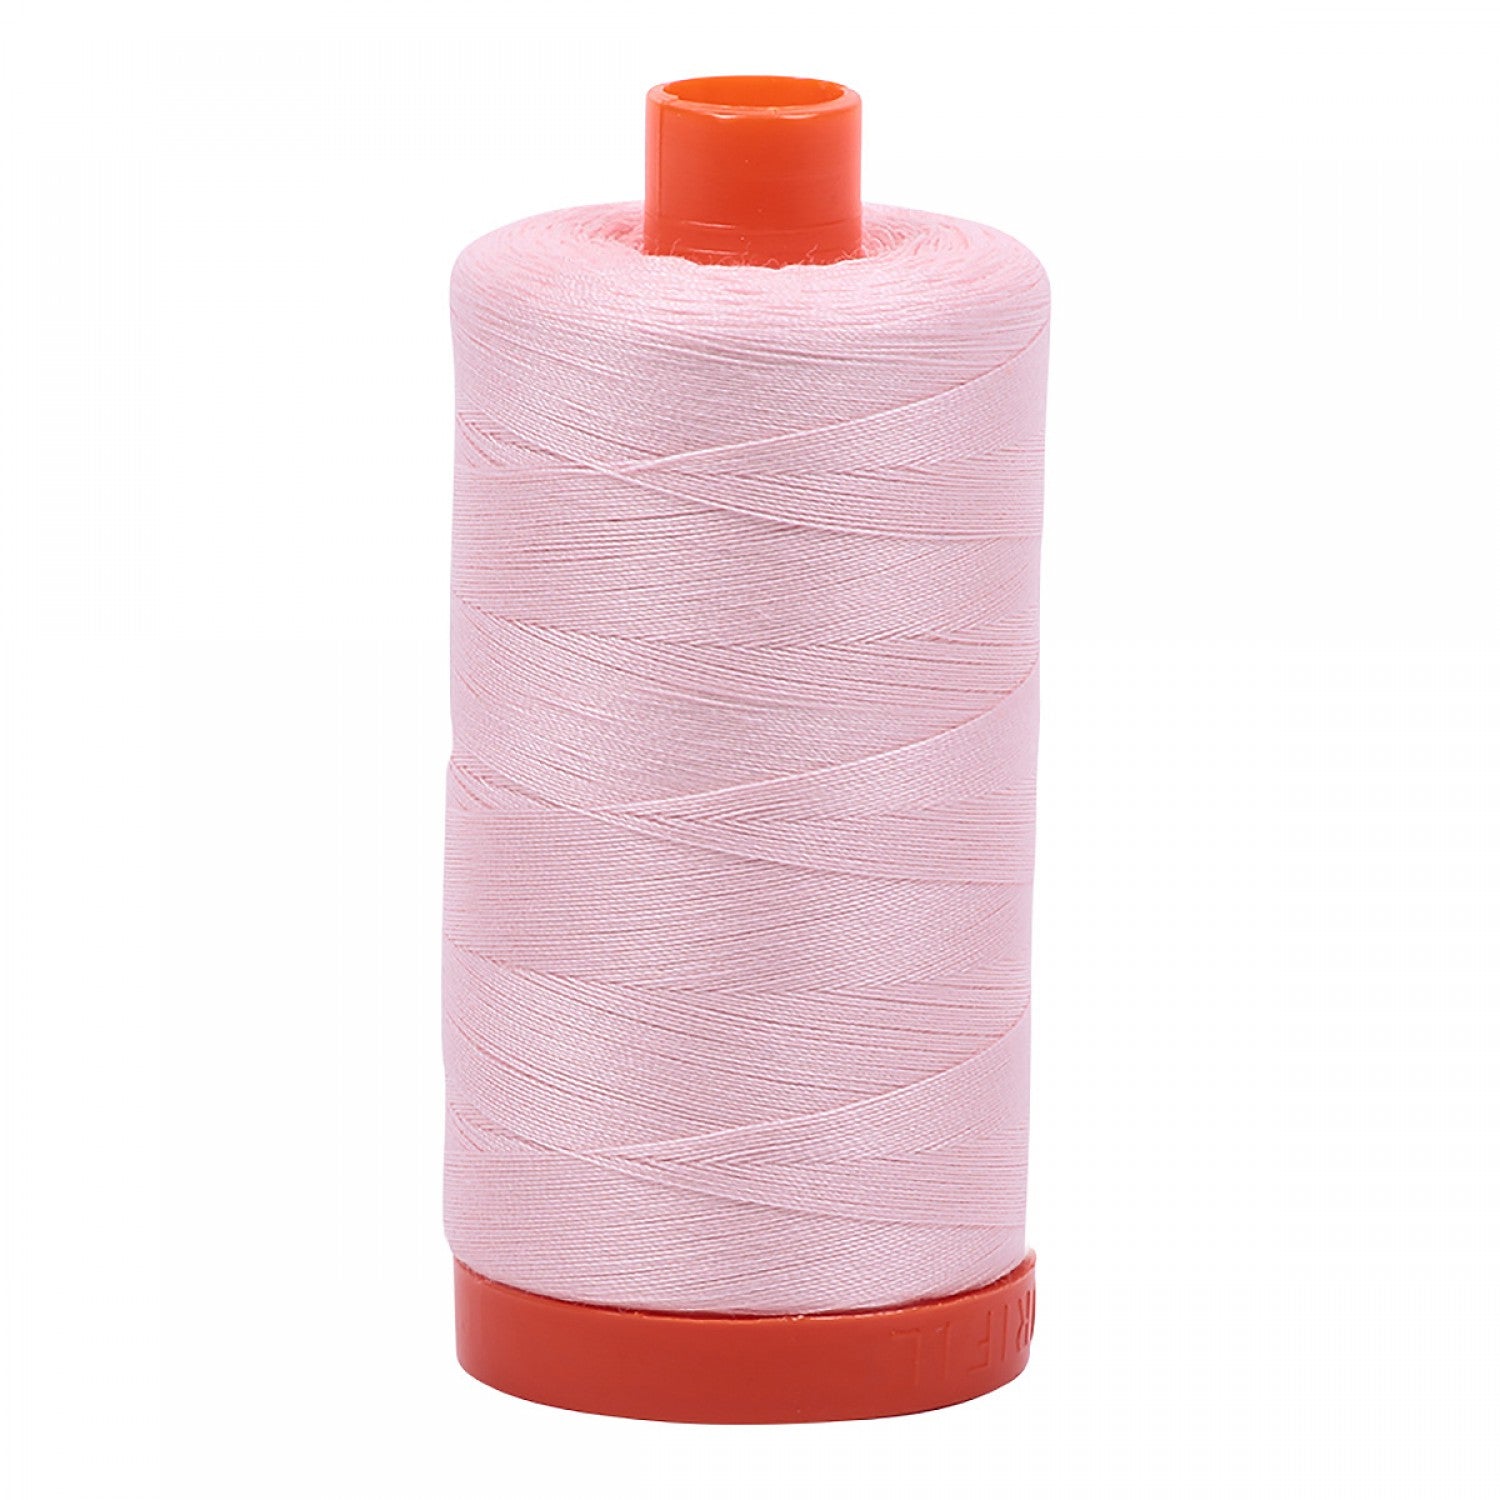 Aurifil Mako 50 wt Cotton Thread - 1422 yds - Pale Pink (2410)